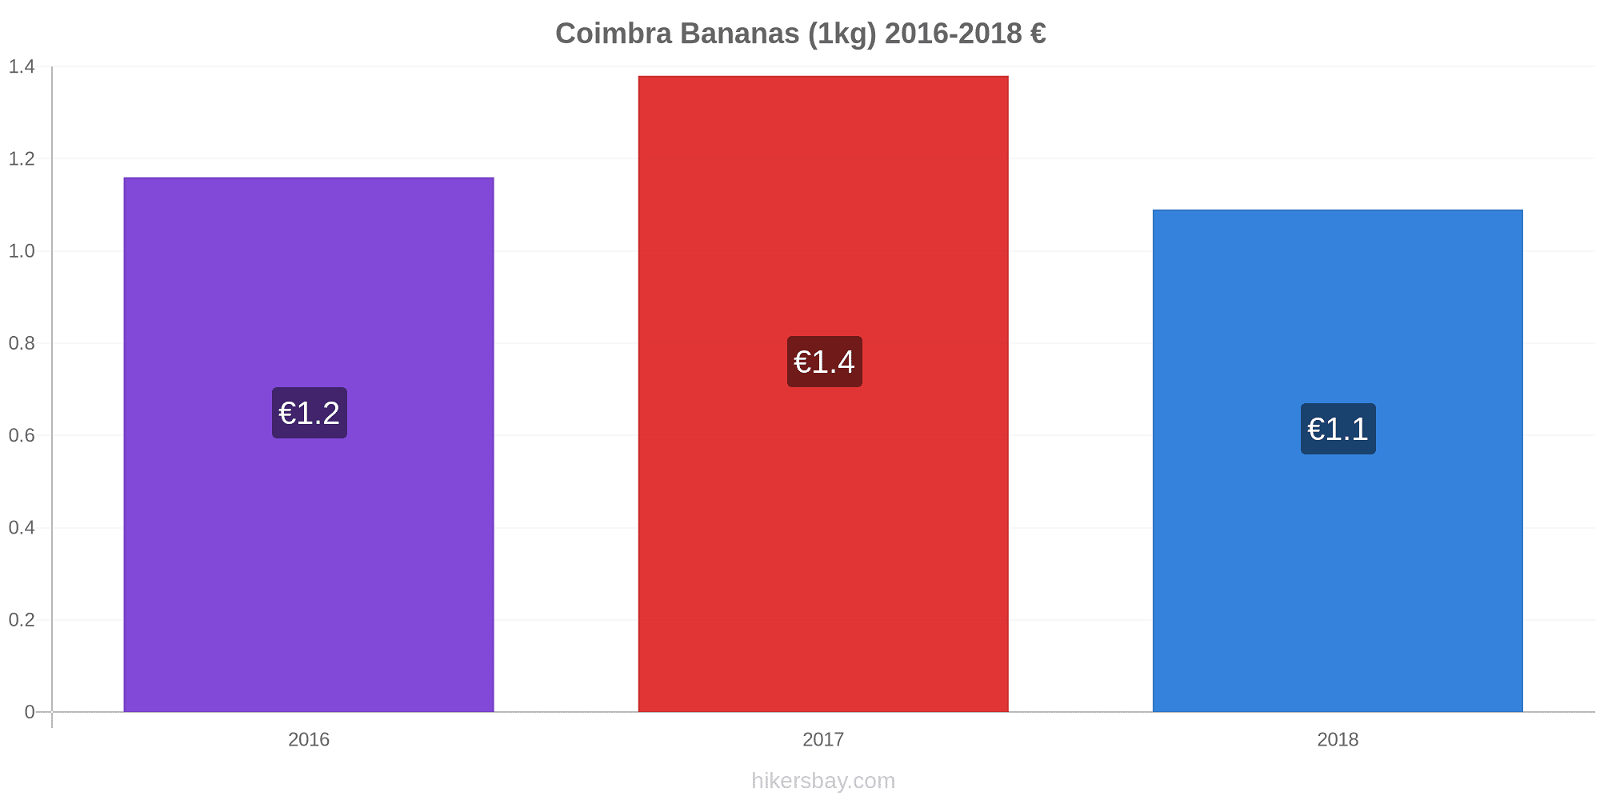 Coimbra price changes Bananas (1kg) hikersbay.com